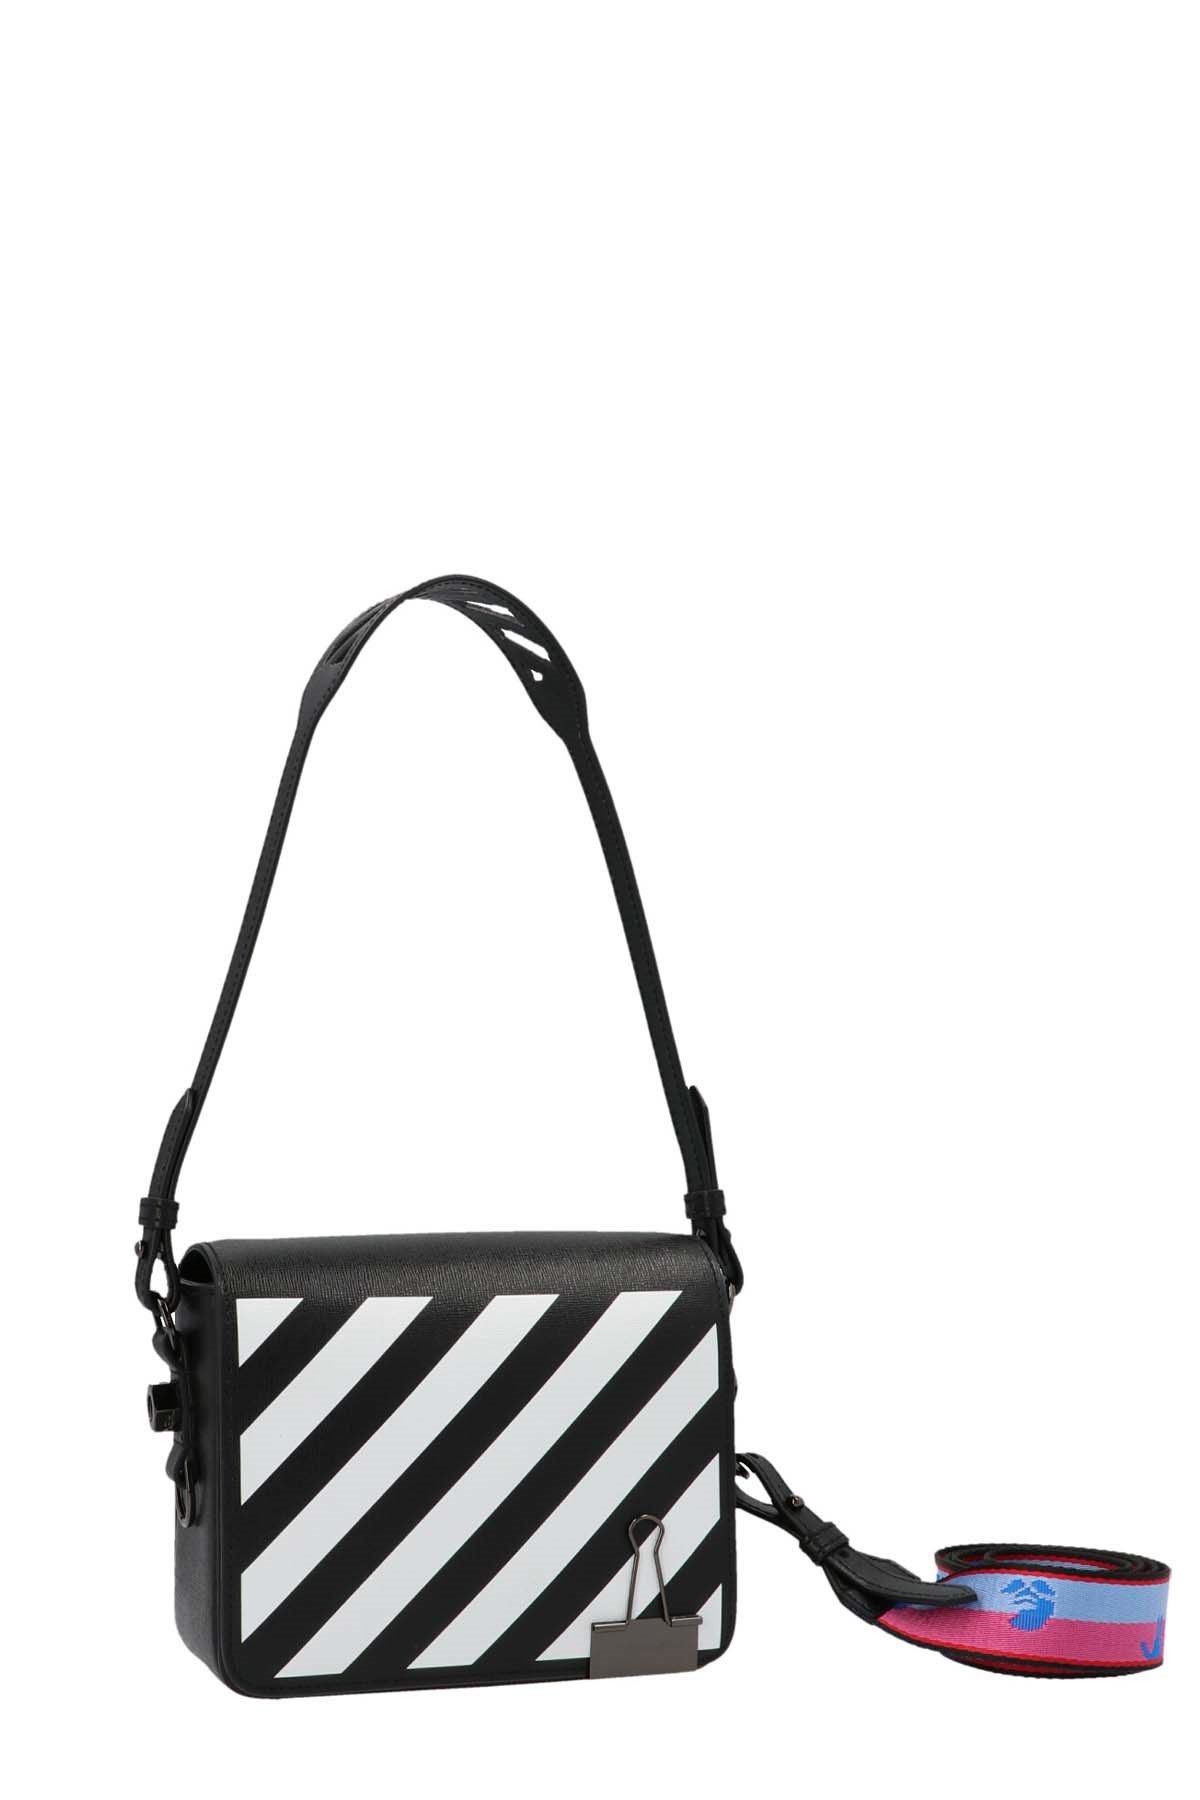 OFF-WHITE 'Diag Flap’ Handbag